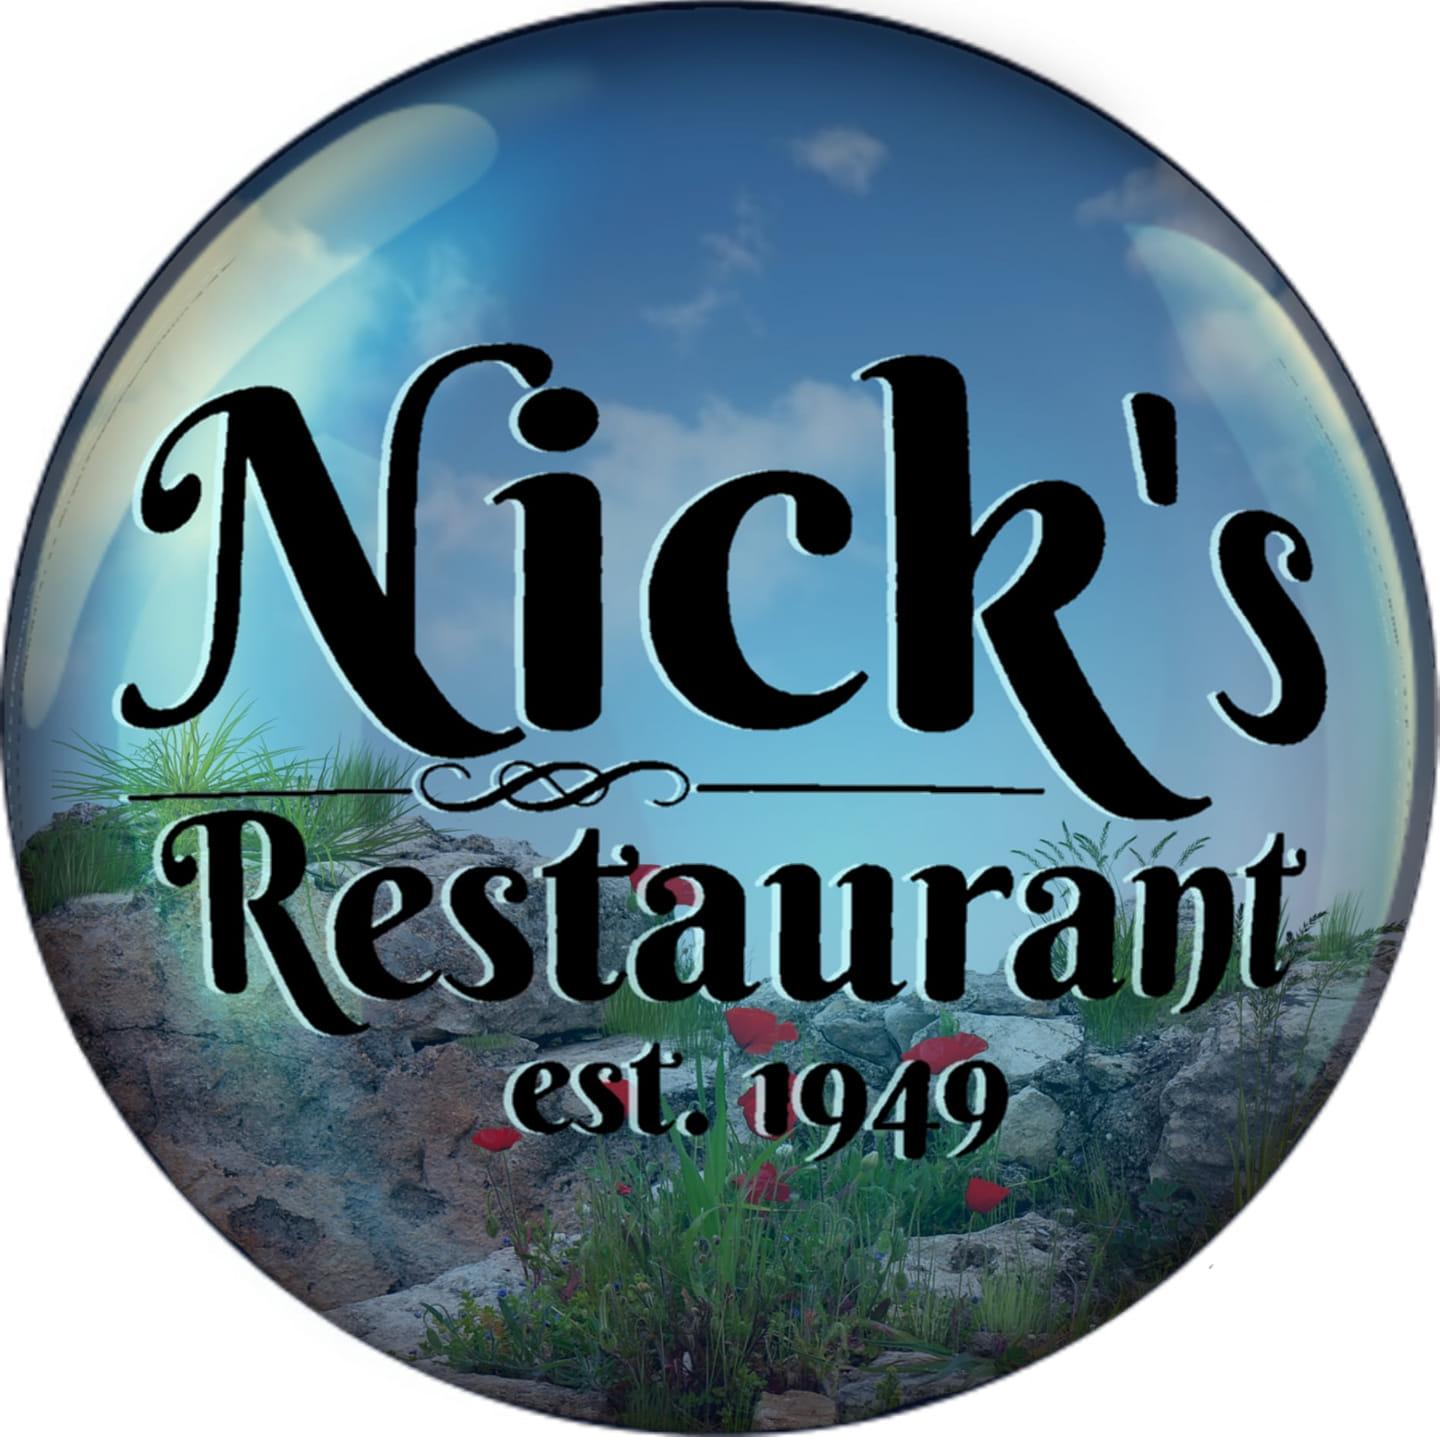 Nick's Restaurant 